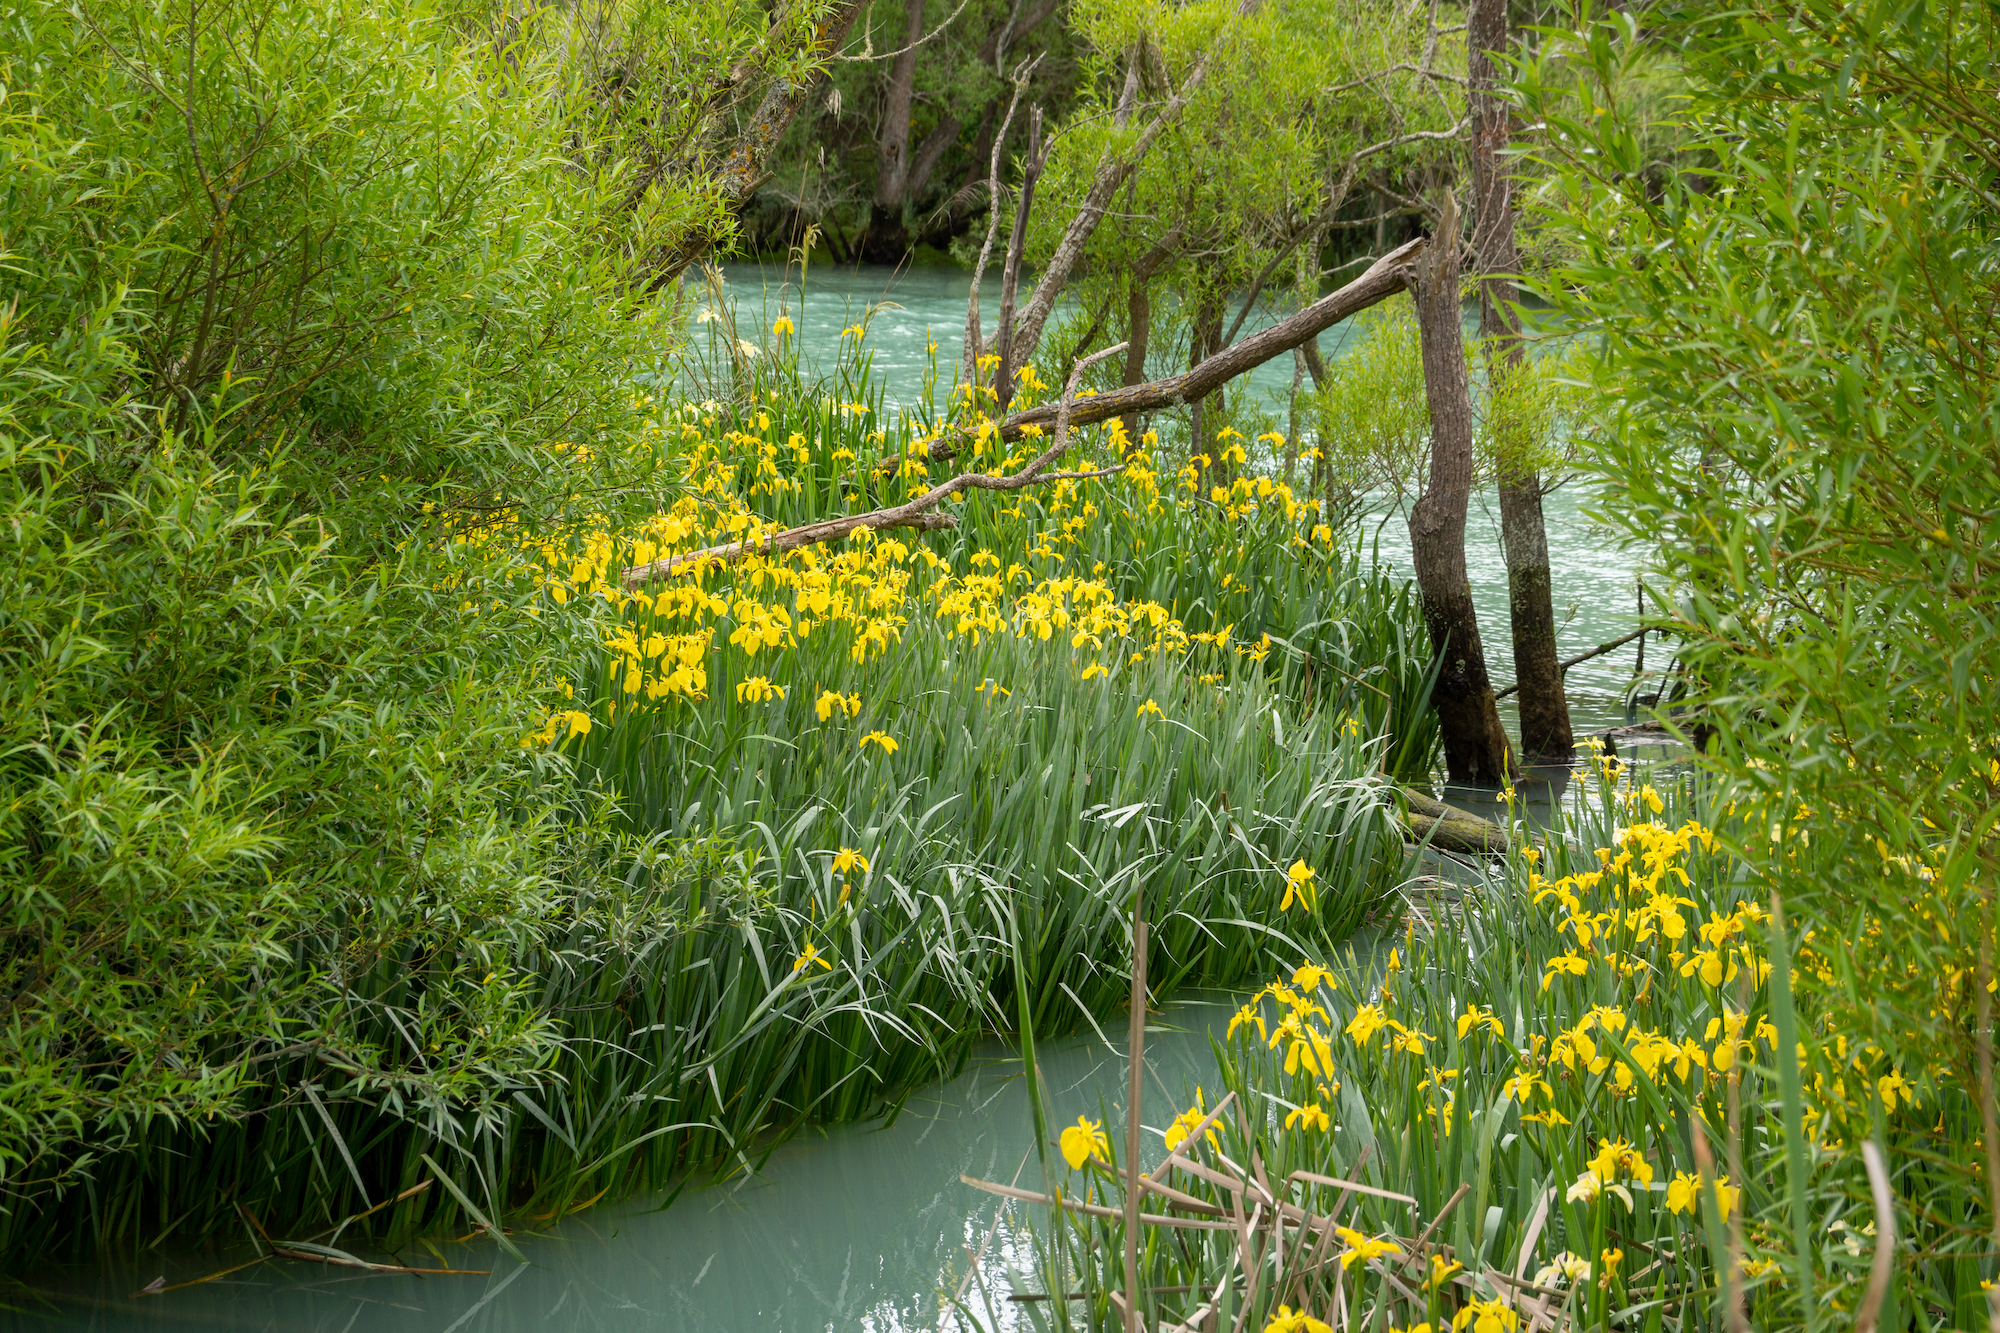 yellow flag iris along a stream